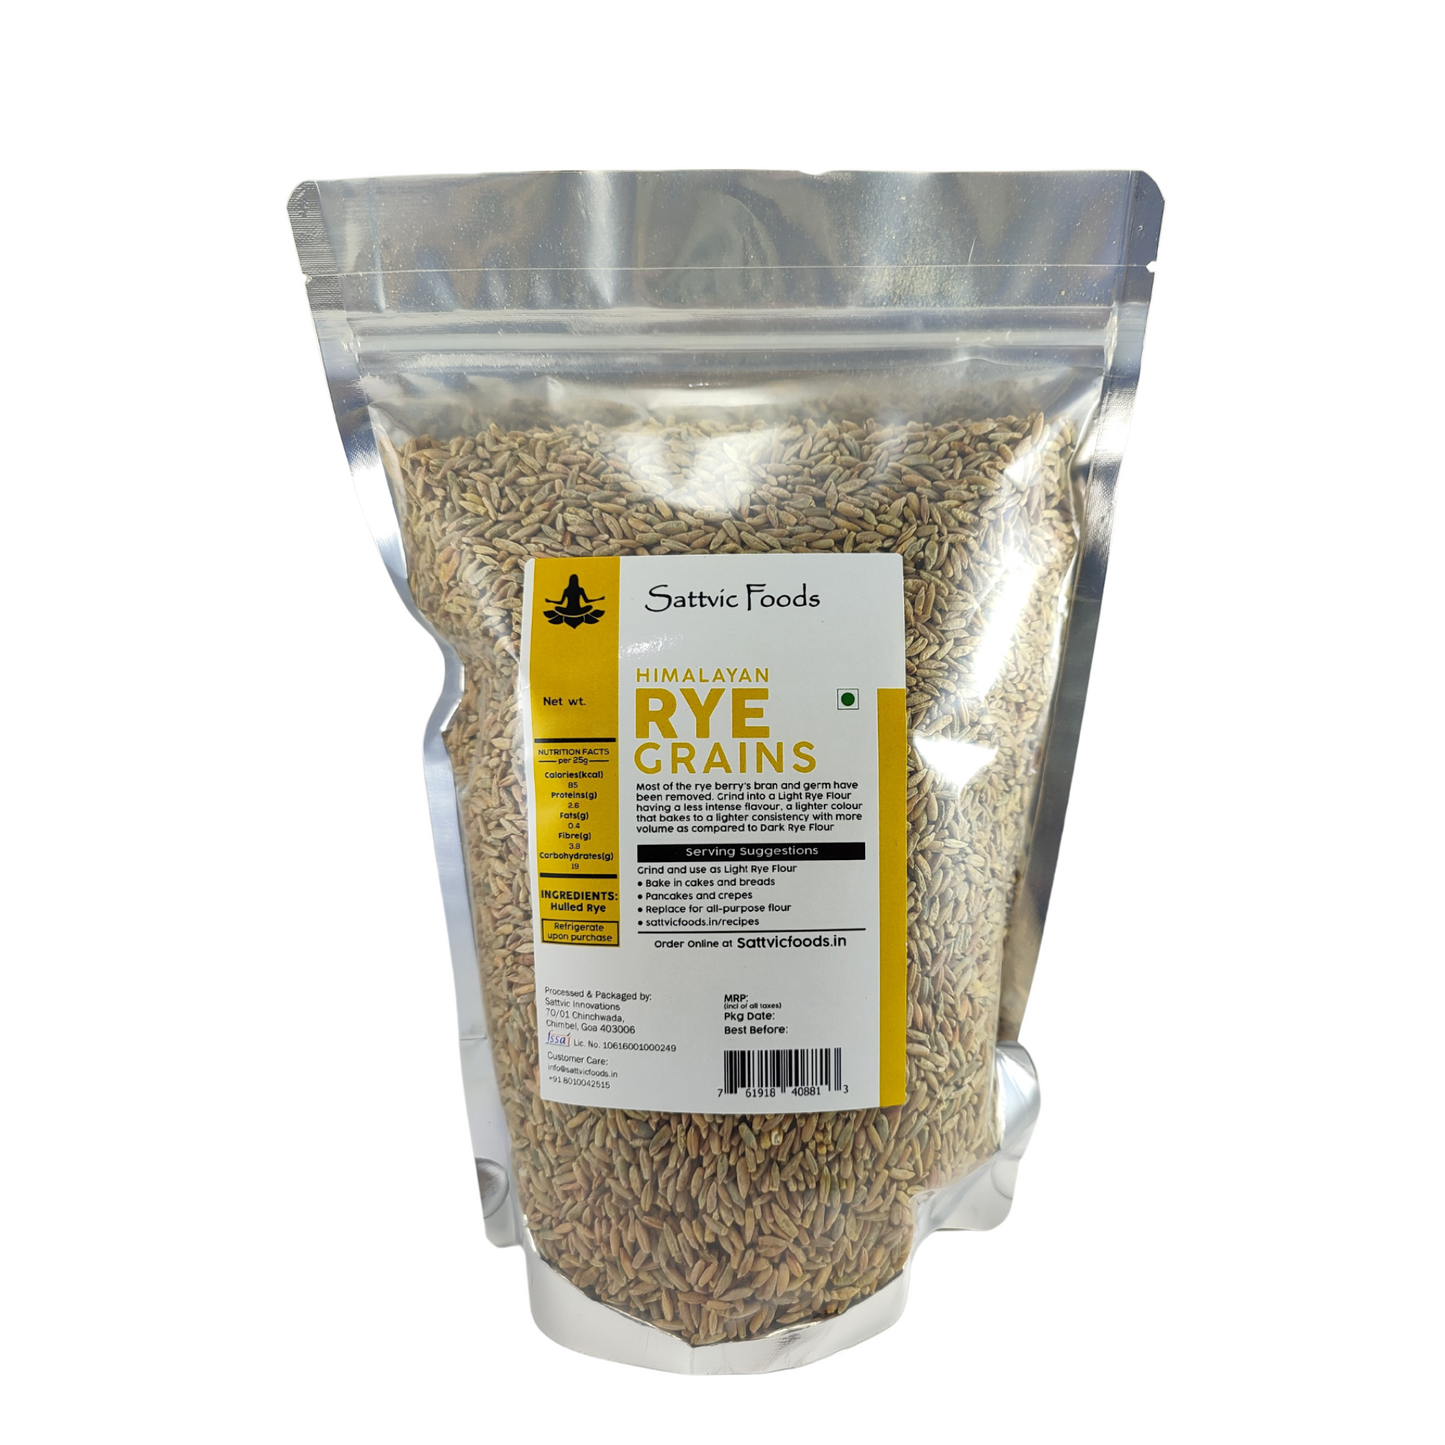 Himalayan Rye Grains - 400g - Sattvic Foods